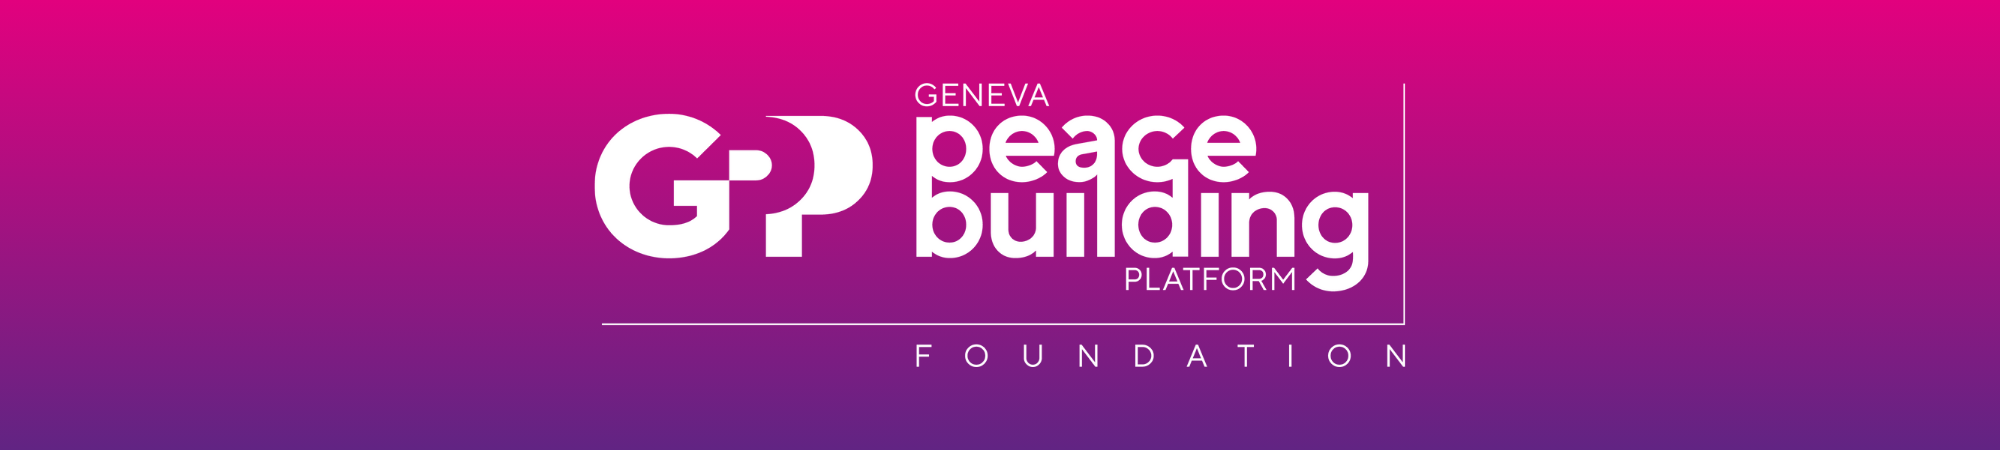 The Geneva Peacebuilding Platform Transitions to Foundation Status